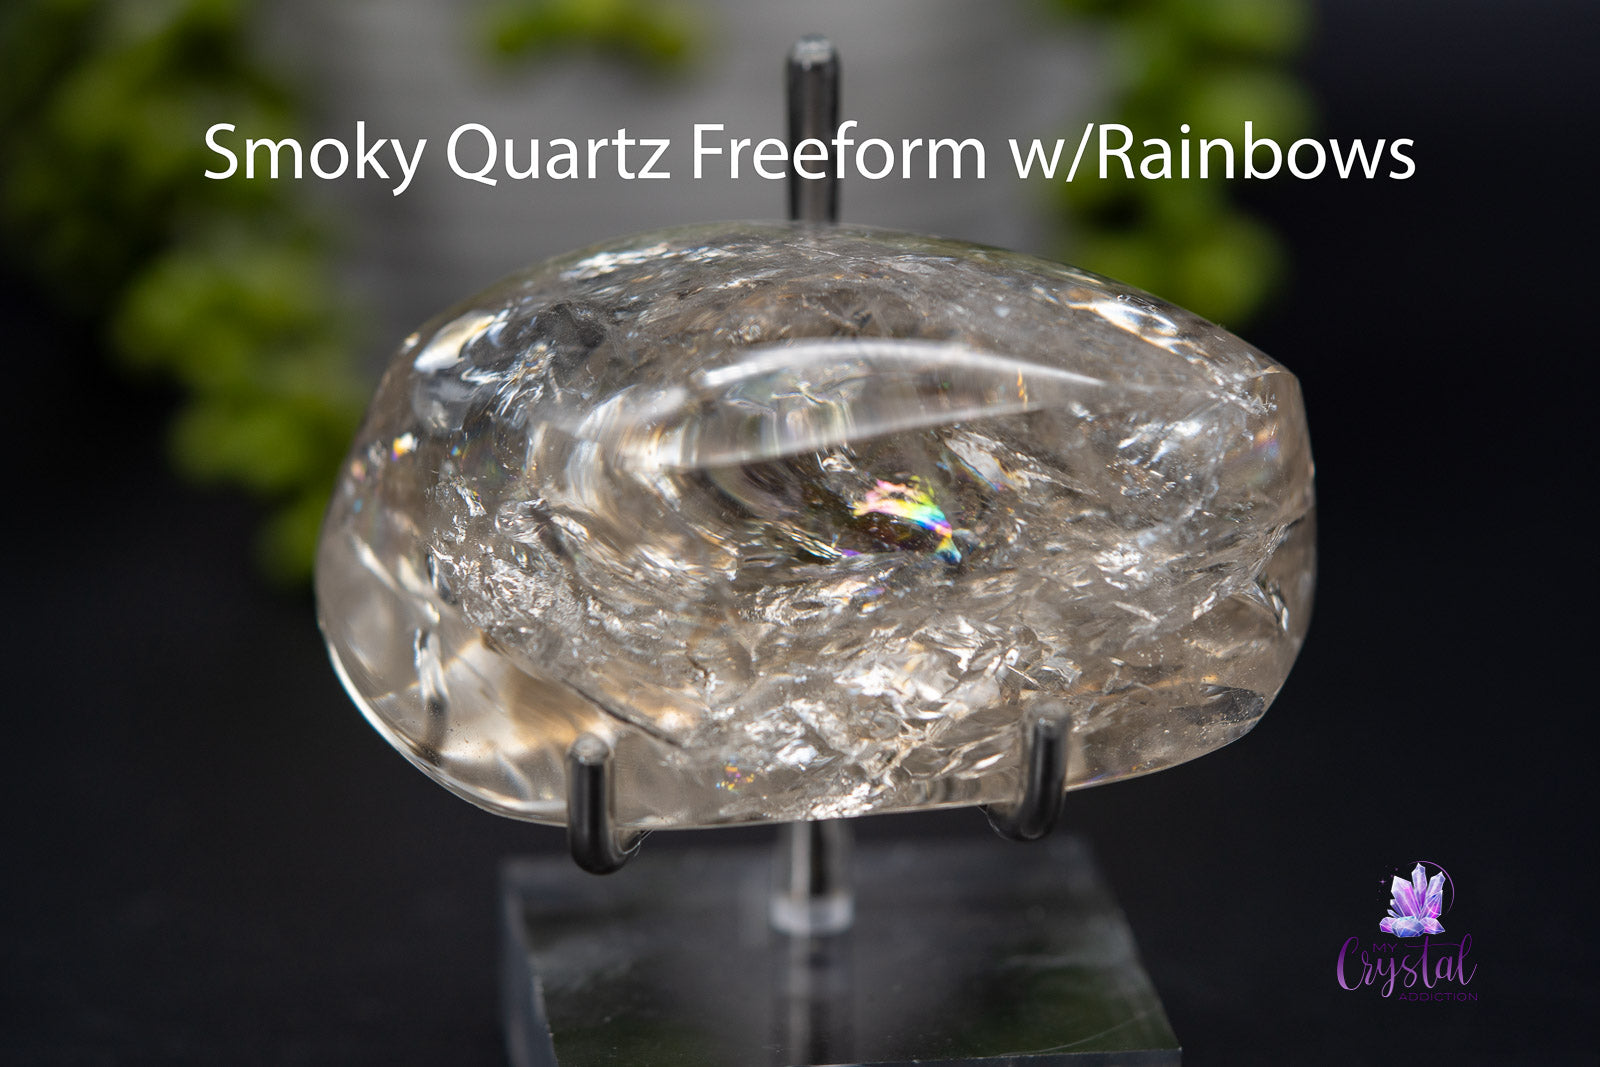 Smoky Quartz Freeform w/Rainbows 3.1"x1.8"/78mm x 45mm - My Crystal Addiction